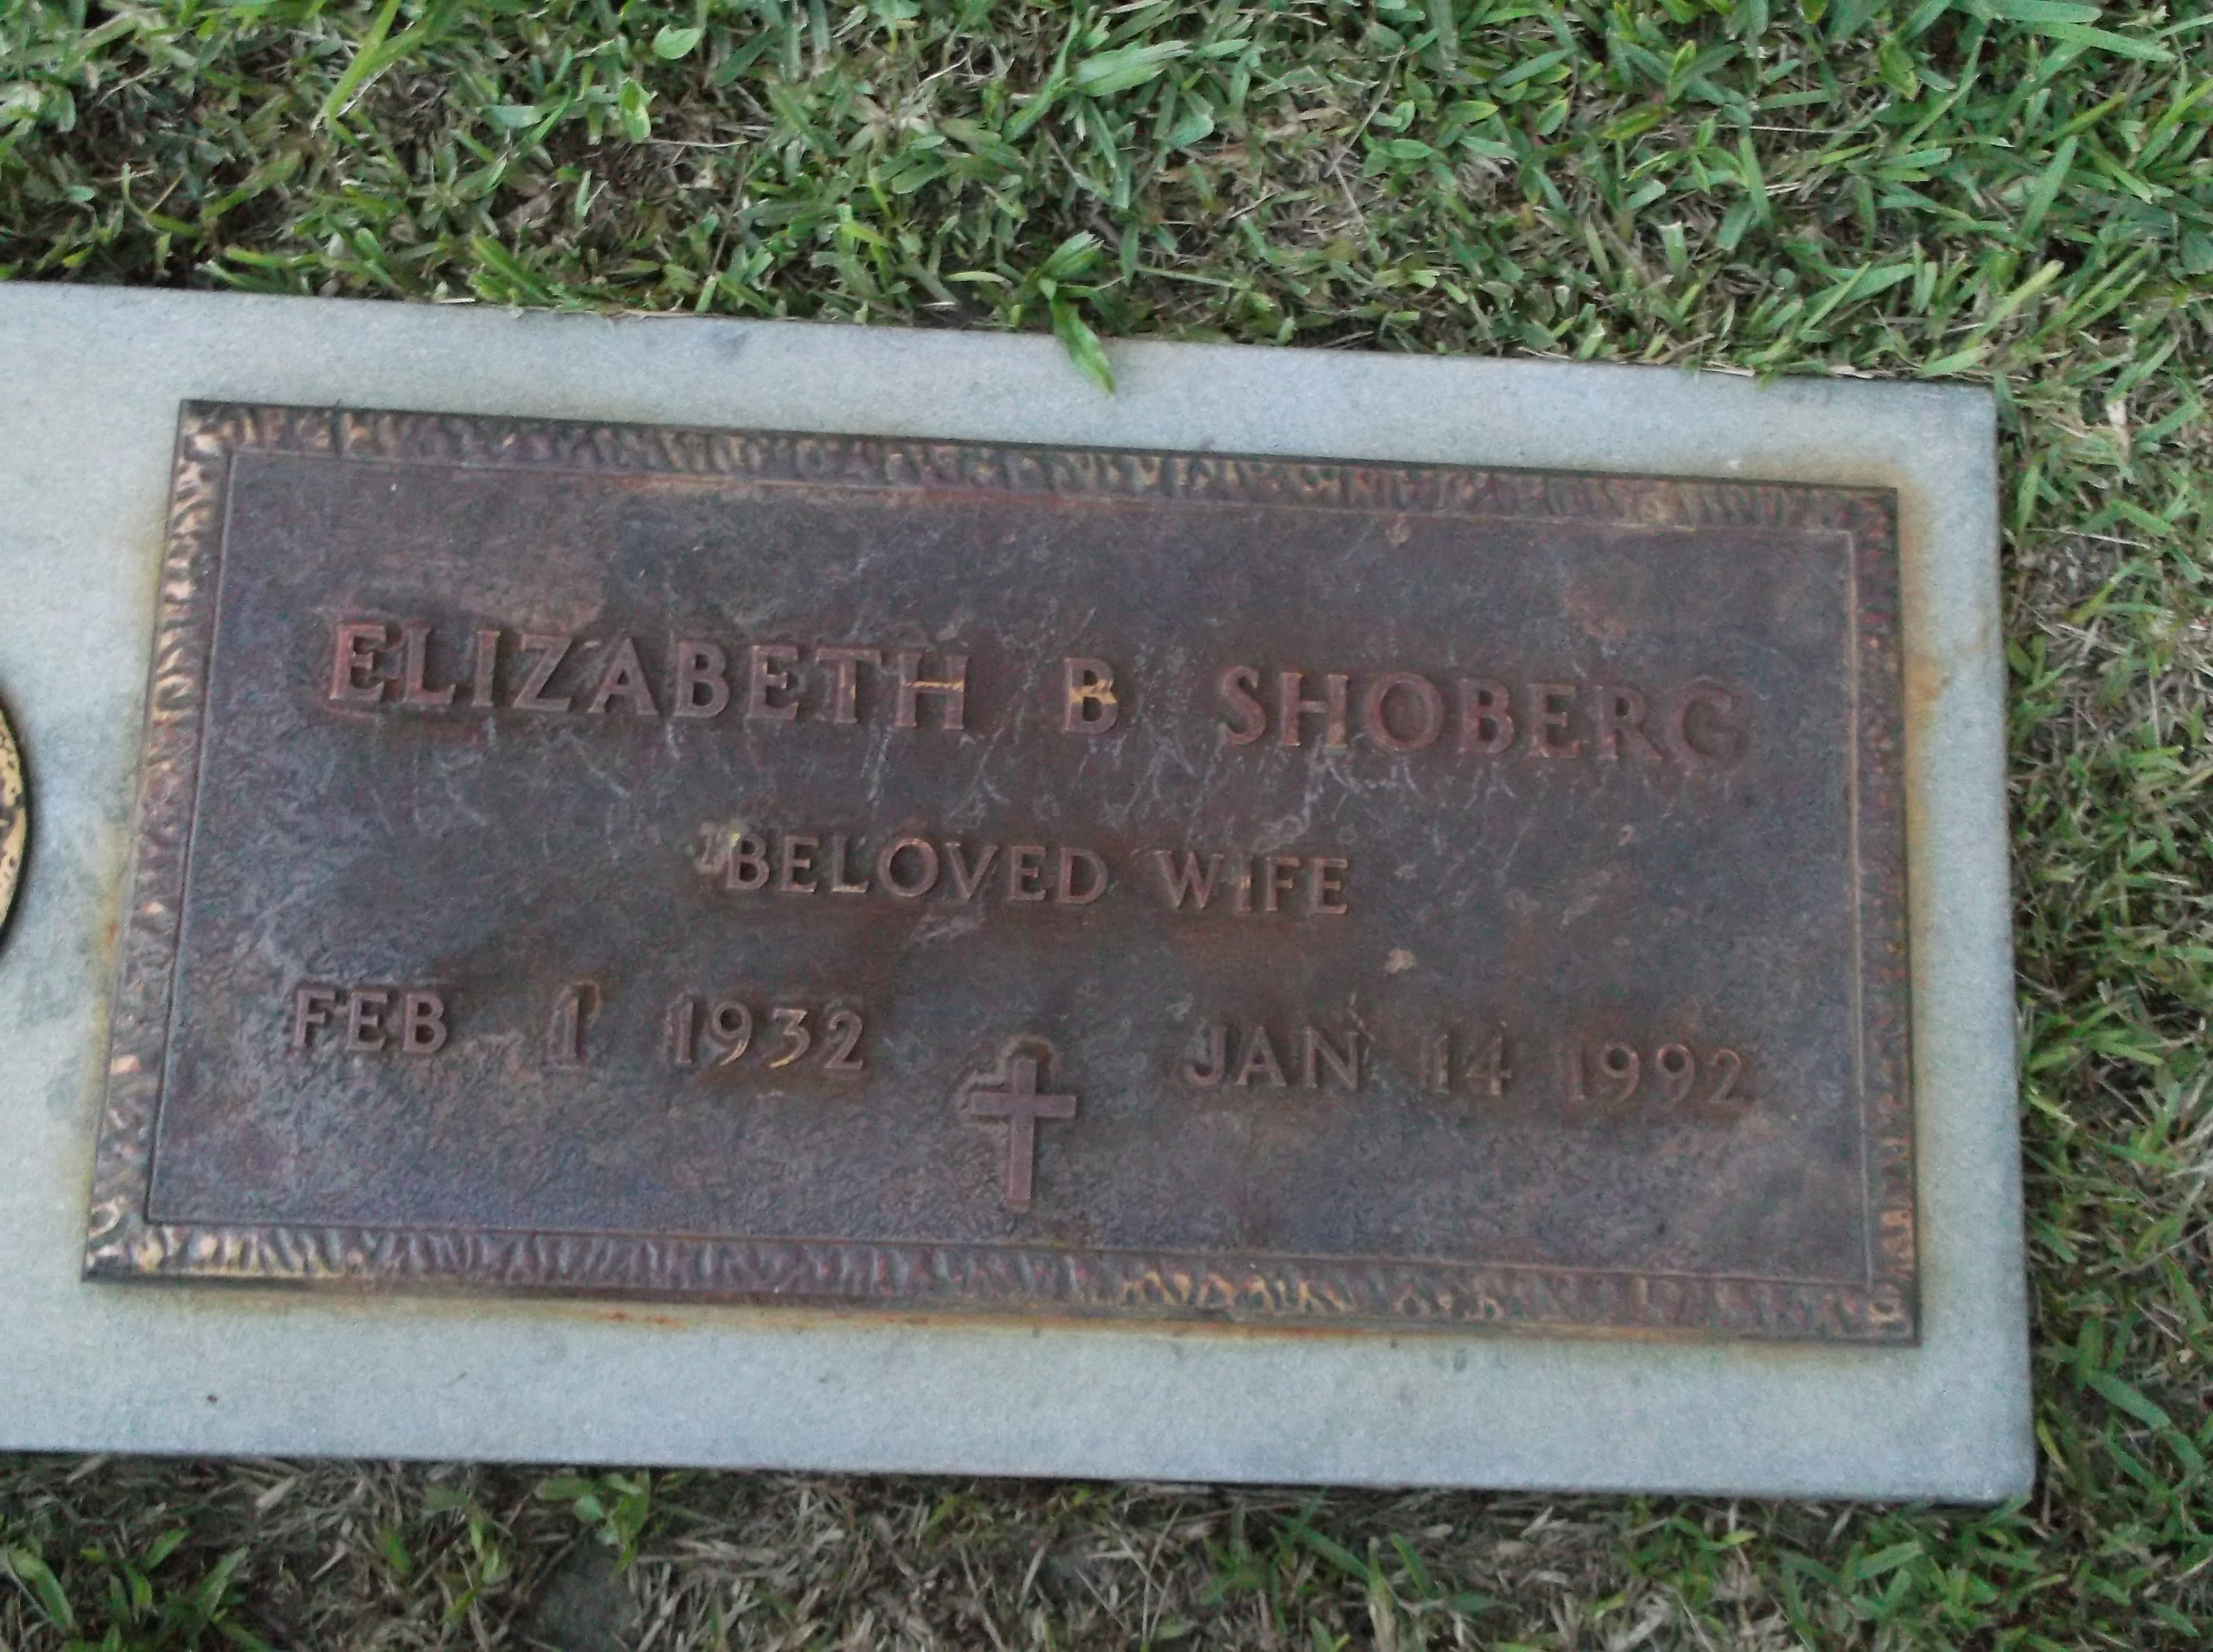 Elizabeth B Shoberg